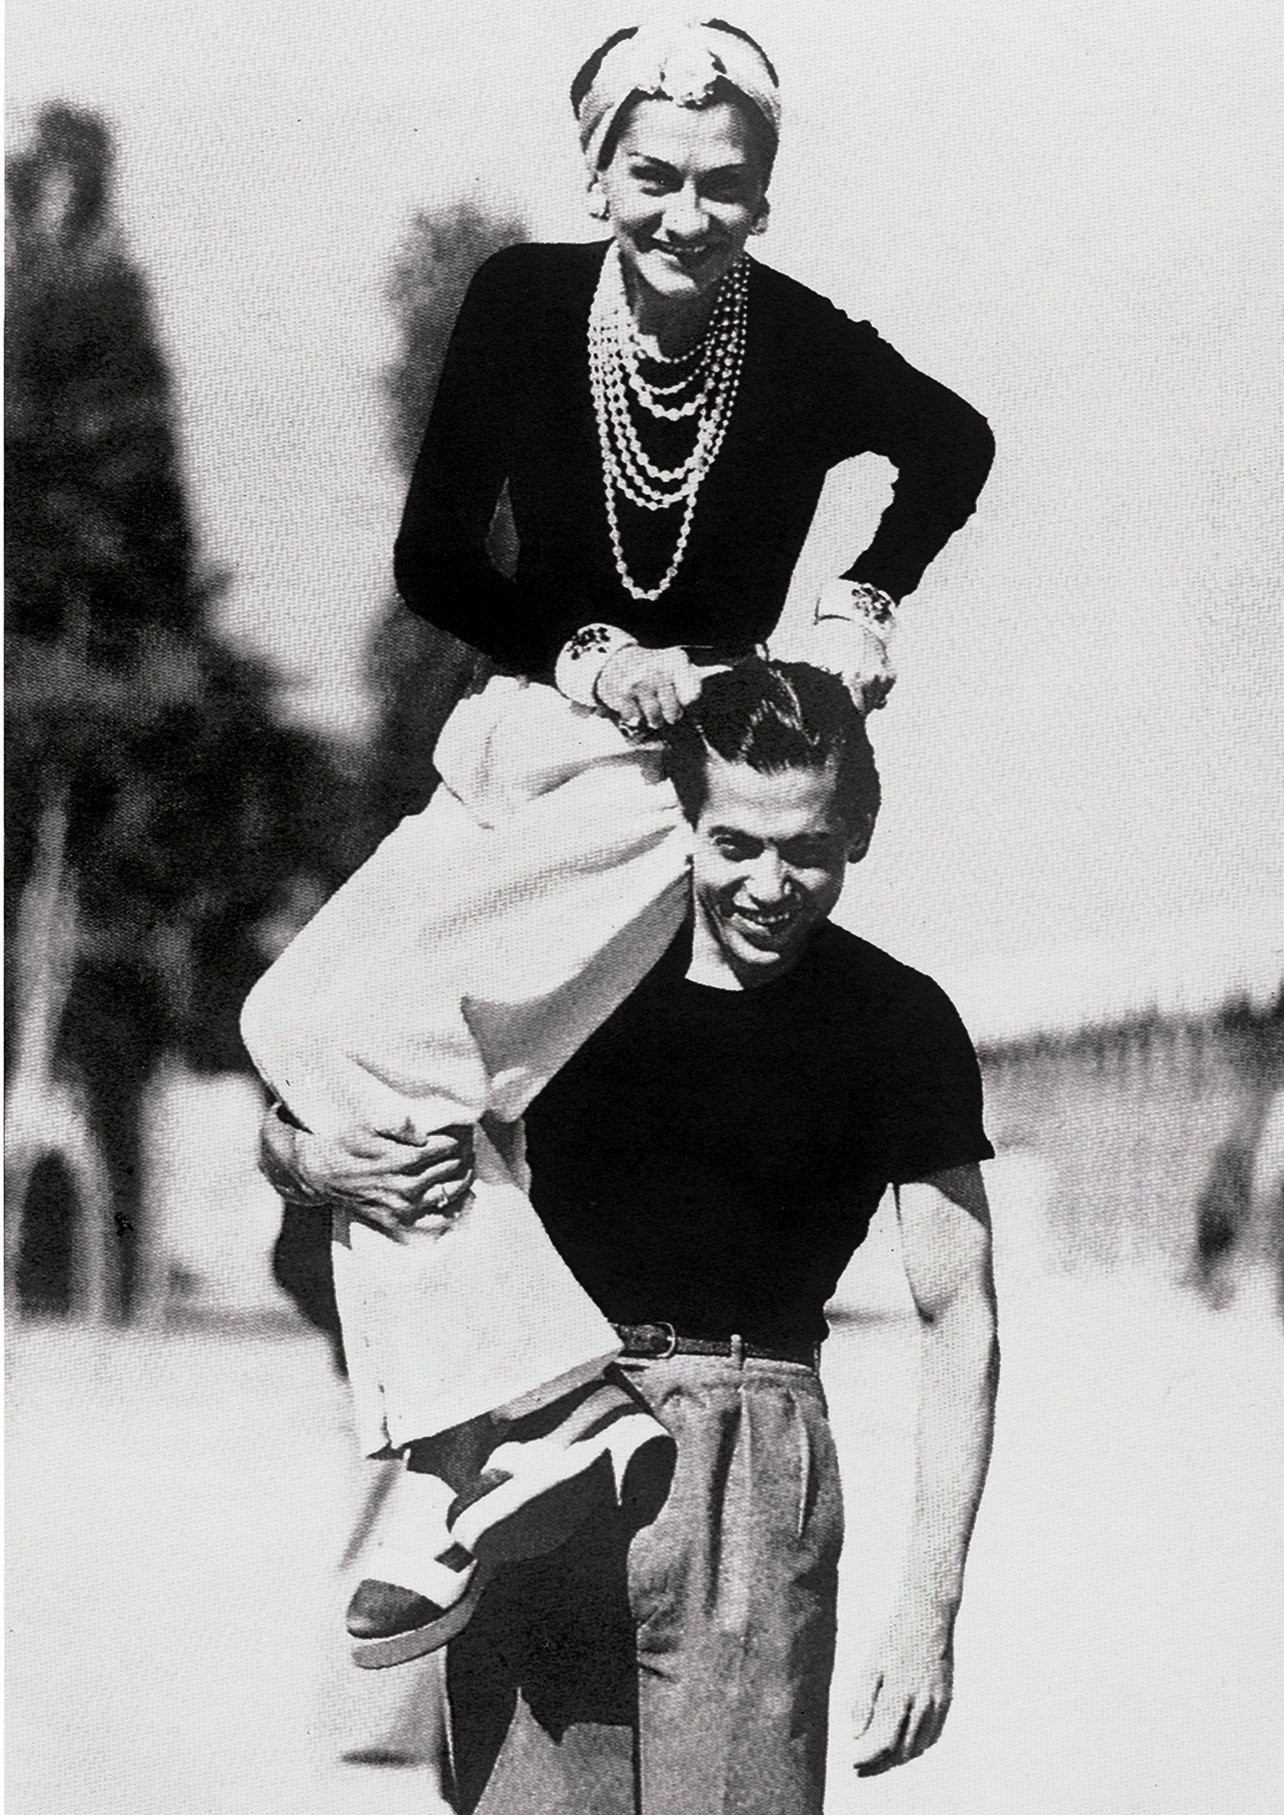 1937-gabrielle-chanel-on-the-shoulder-of-her-friend-serge-lifar-photo-jean-moral-brigitte-moral-ld-NgJtq.jpg